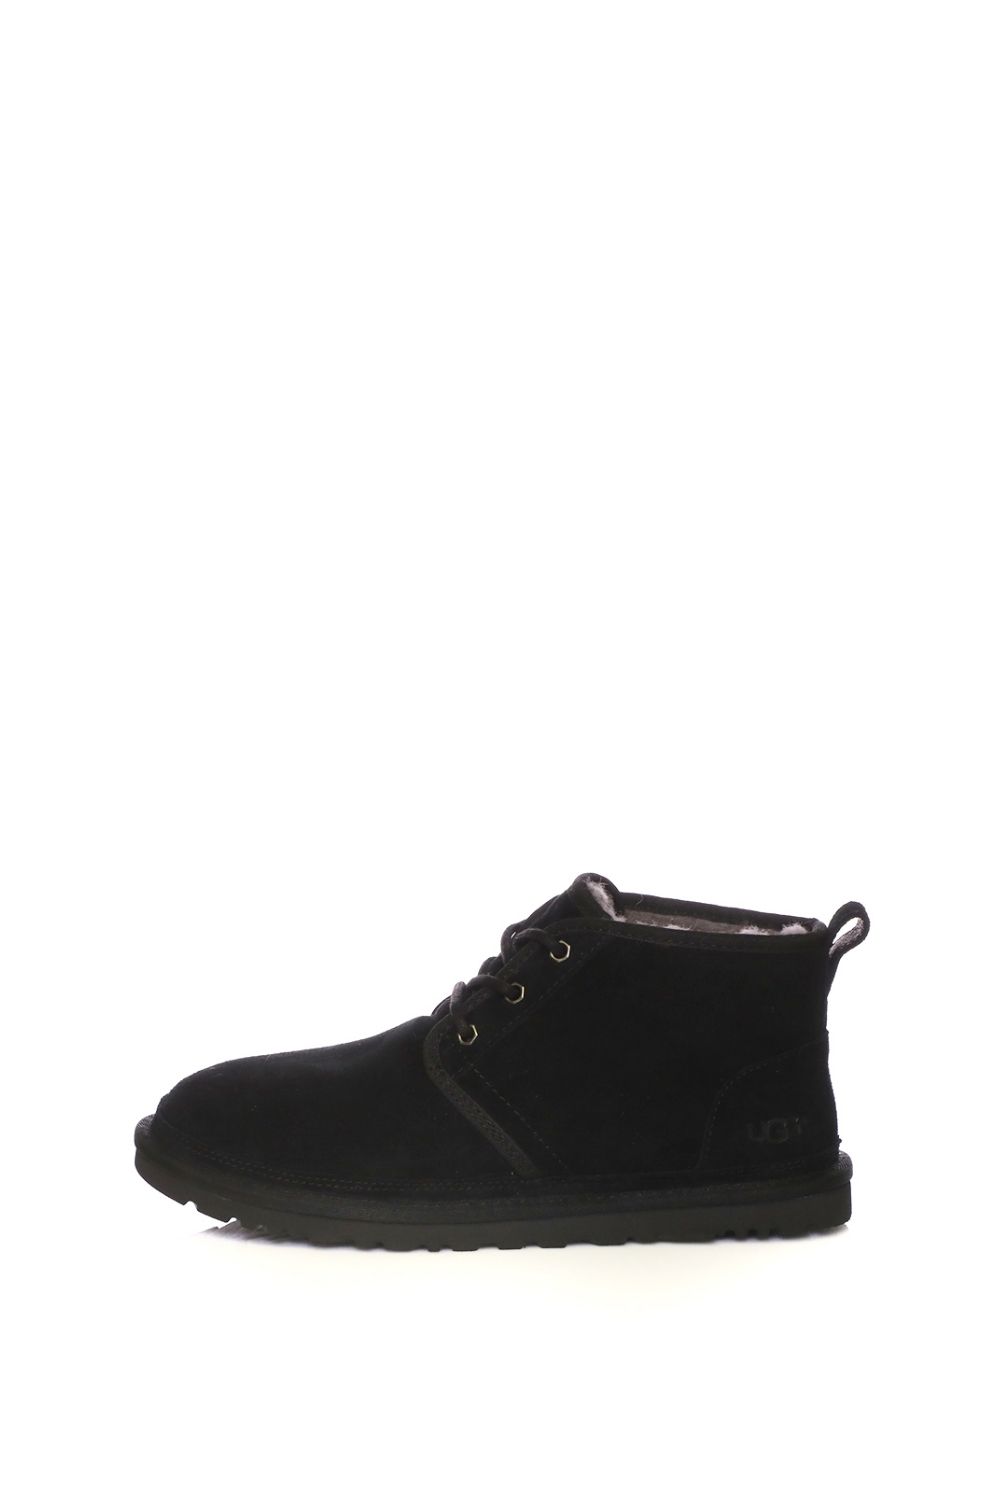 UGG - Ανδρικά μποτάκια UGG Neumel μαύρα Ανδρικά/Παπούτσια/Μπότες-Μποτάκια/Μποτάκια